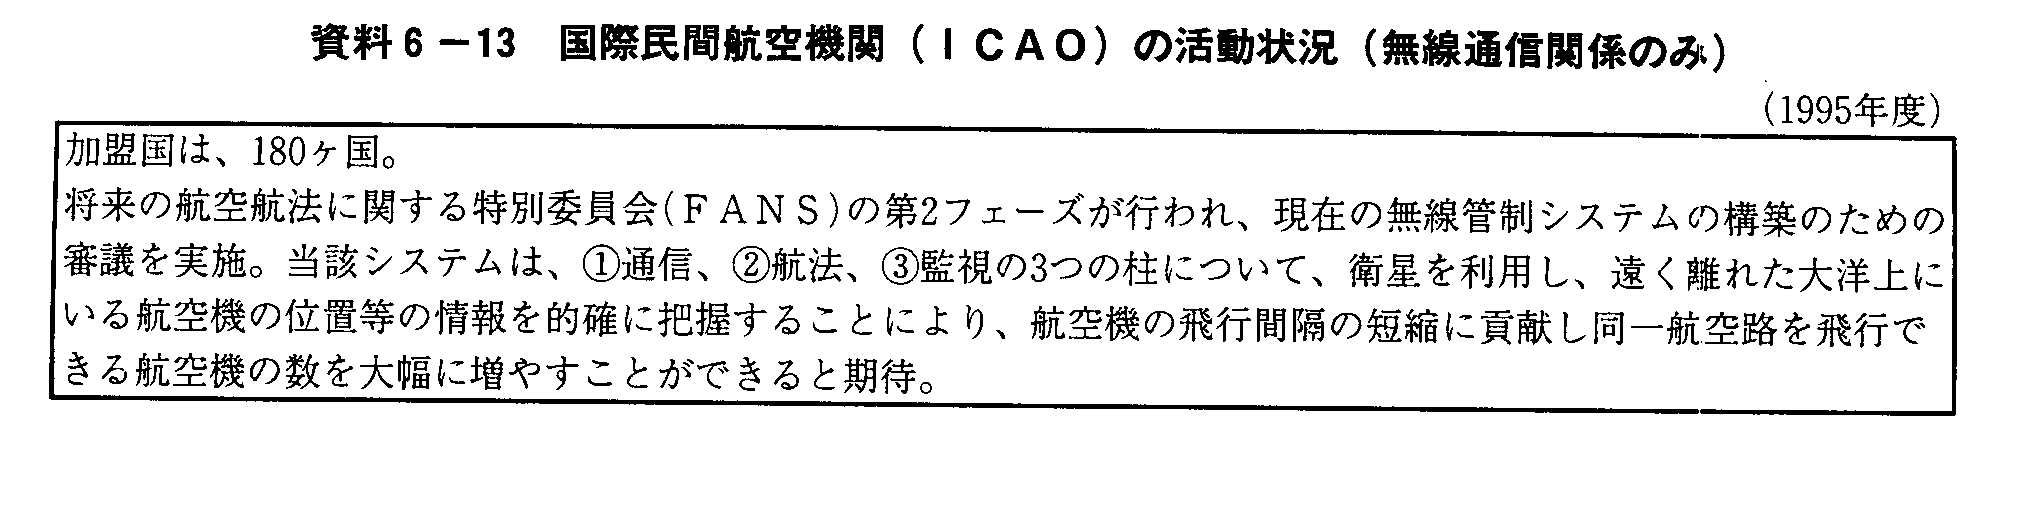 6-13 ۖԍq@(ICAO)̊(ʐM֌Ŵ) (1995Nx)